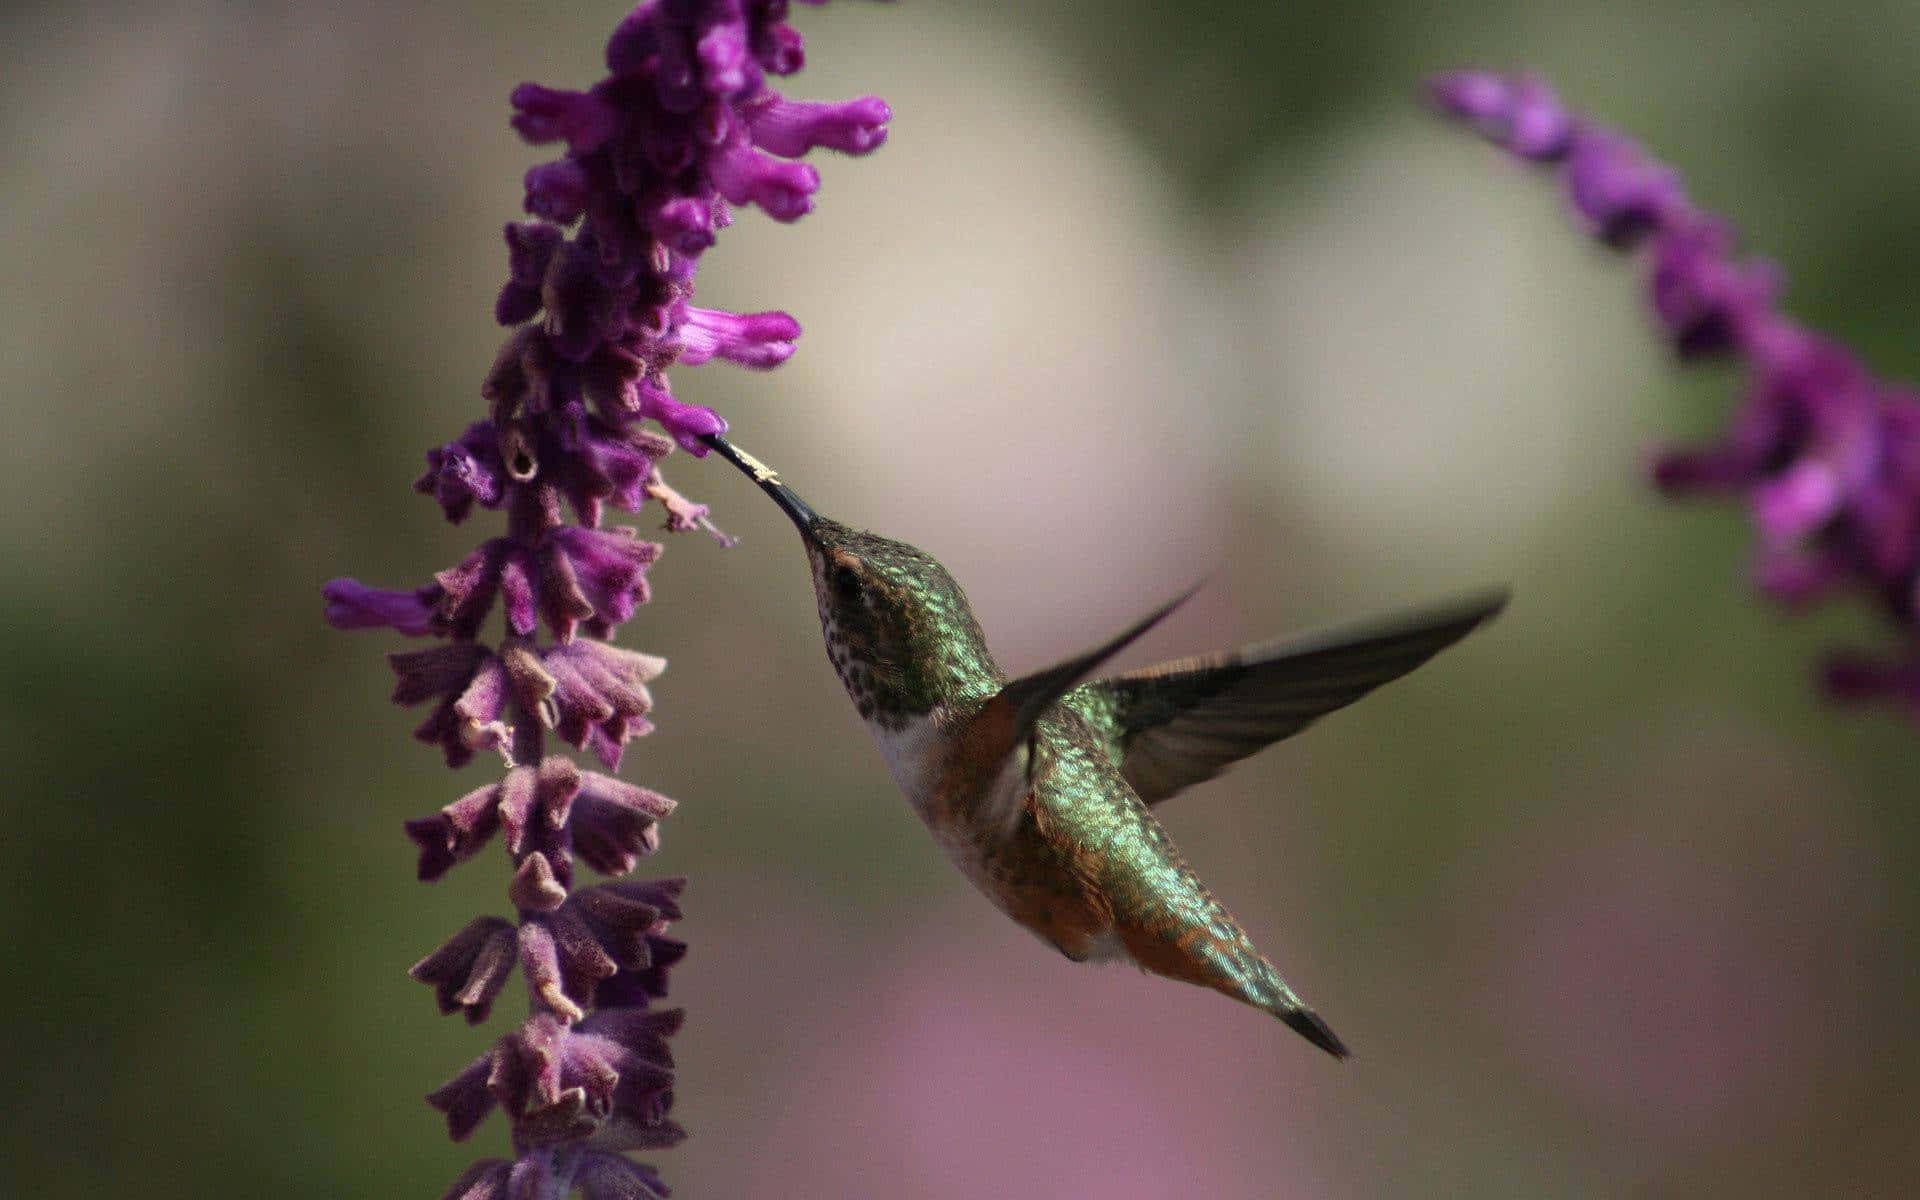 A vibrant hummingbird enjoying the sweet nectar of a flower.